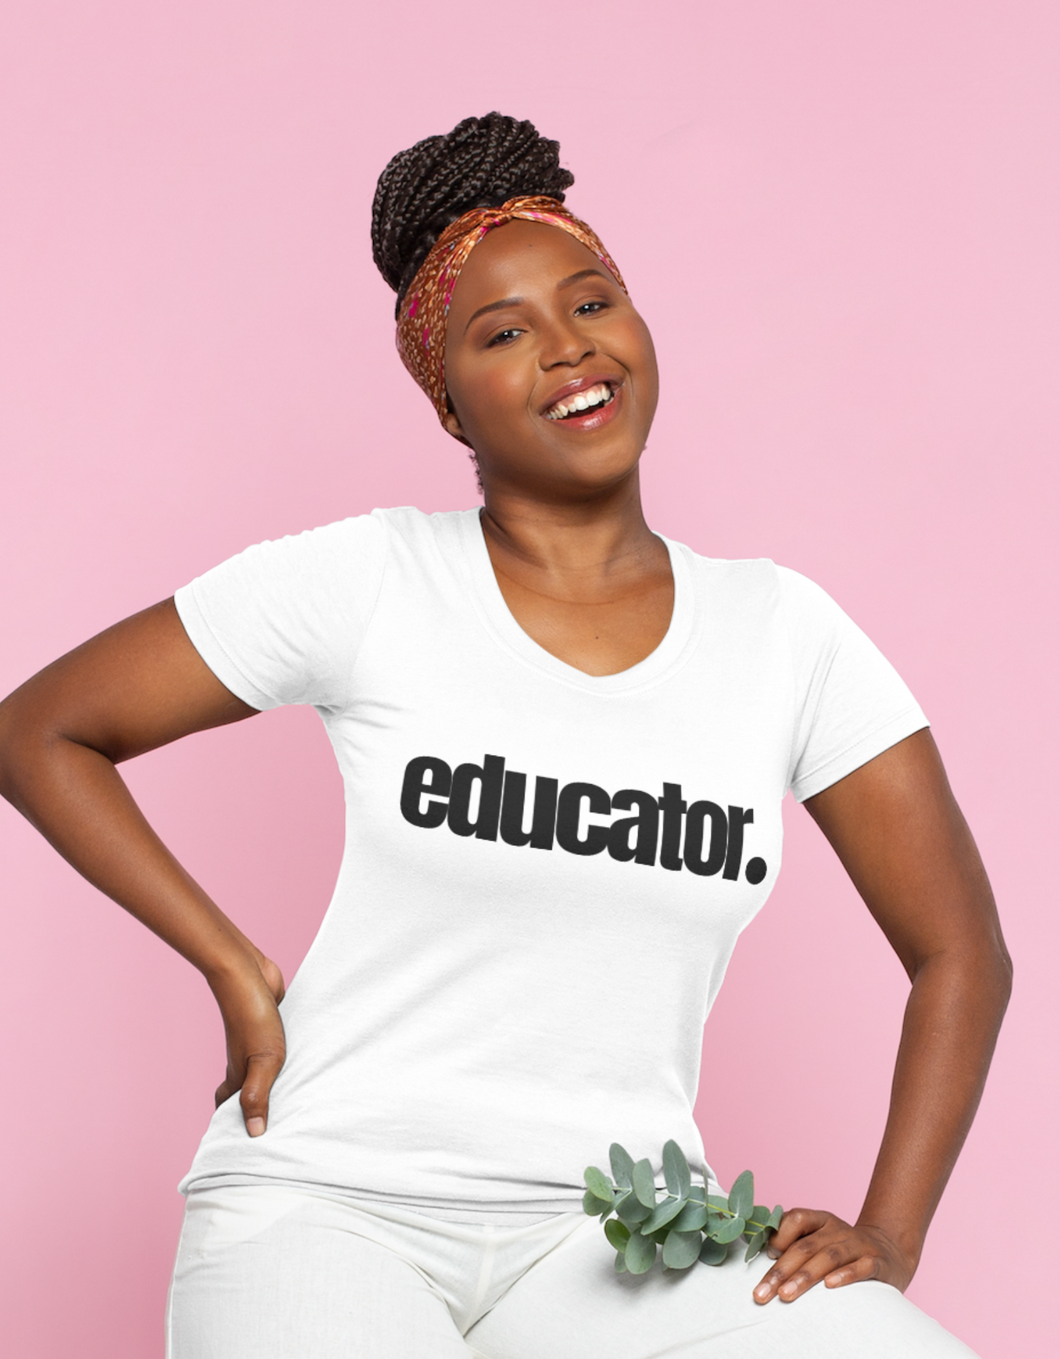 Educator. Women's T-shirt